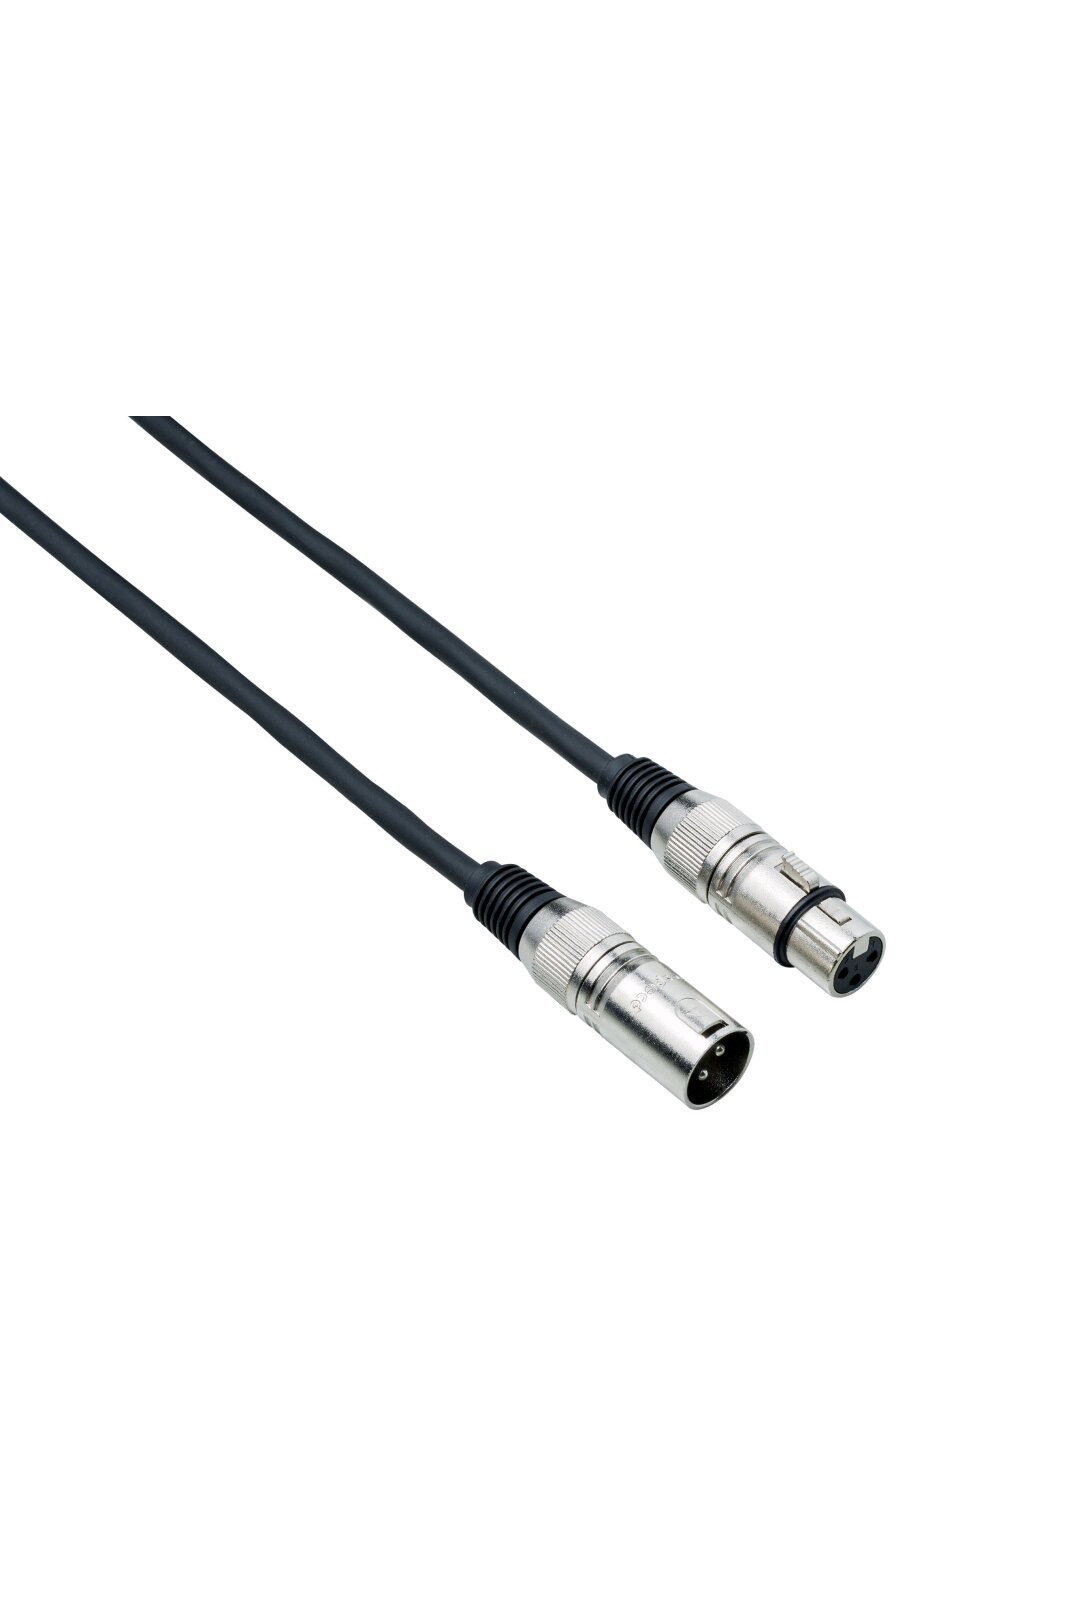 Bespeco DMX001 câble DMX 1 m : photo 1